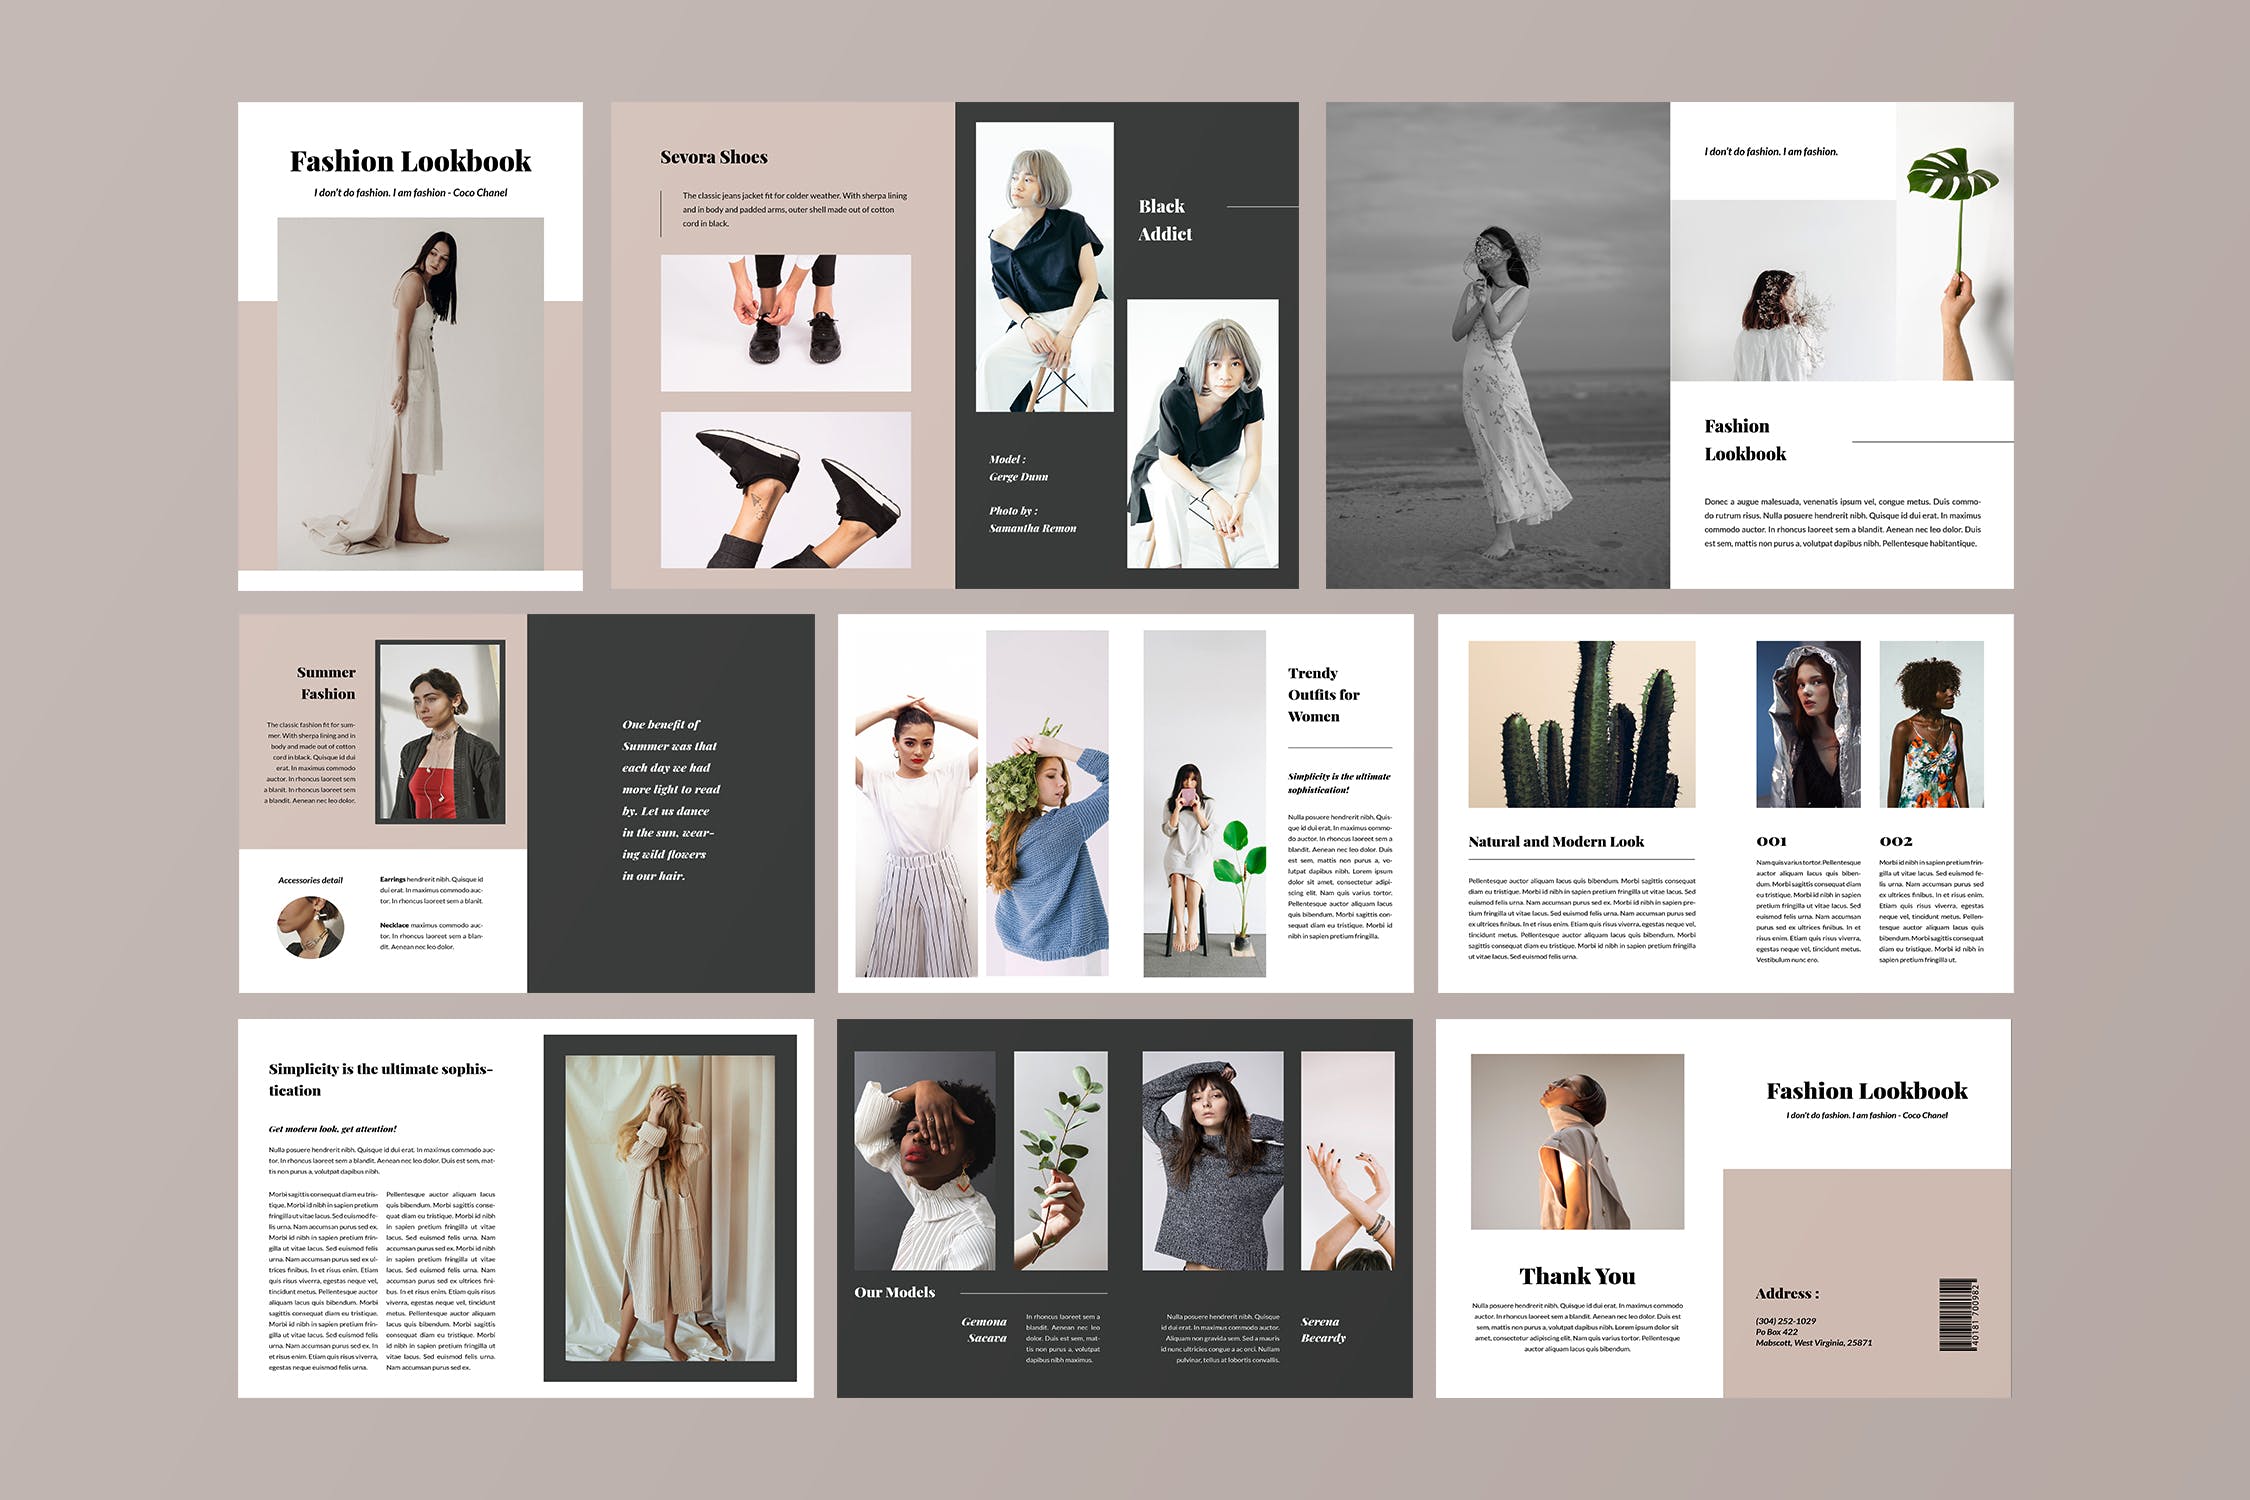 时尚品牌服饰产品手册/产品画册设计模板 Fashion Lookbook Catalogue插图4